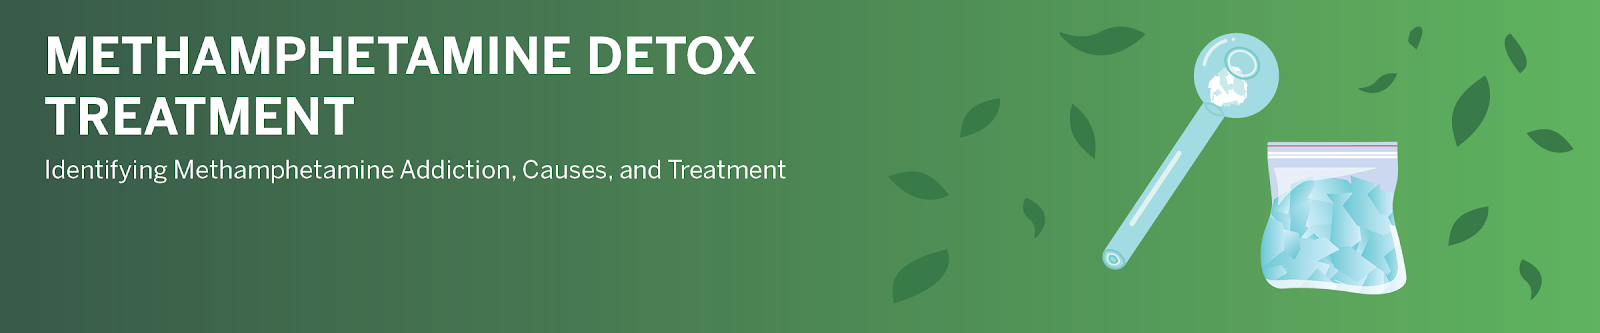 Methamphetamine detox treatment